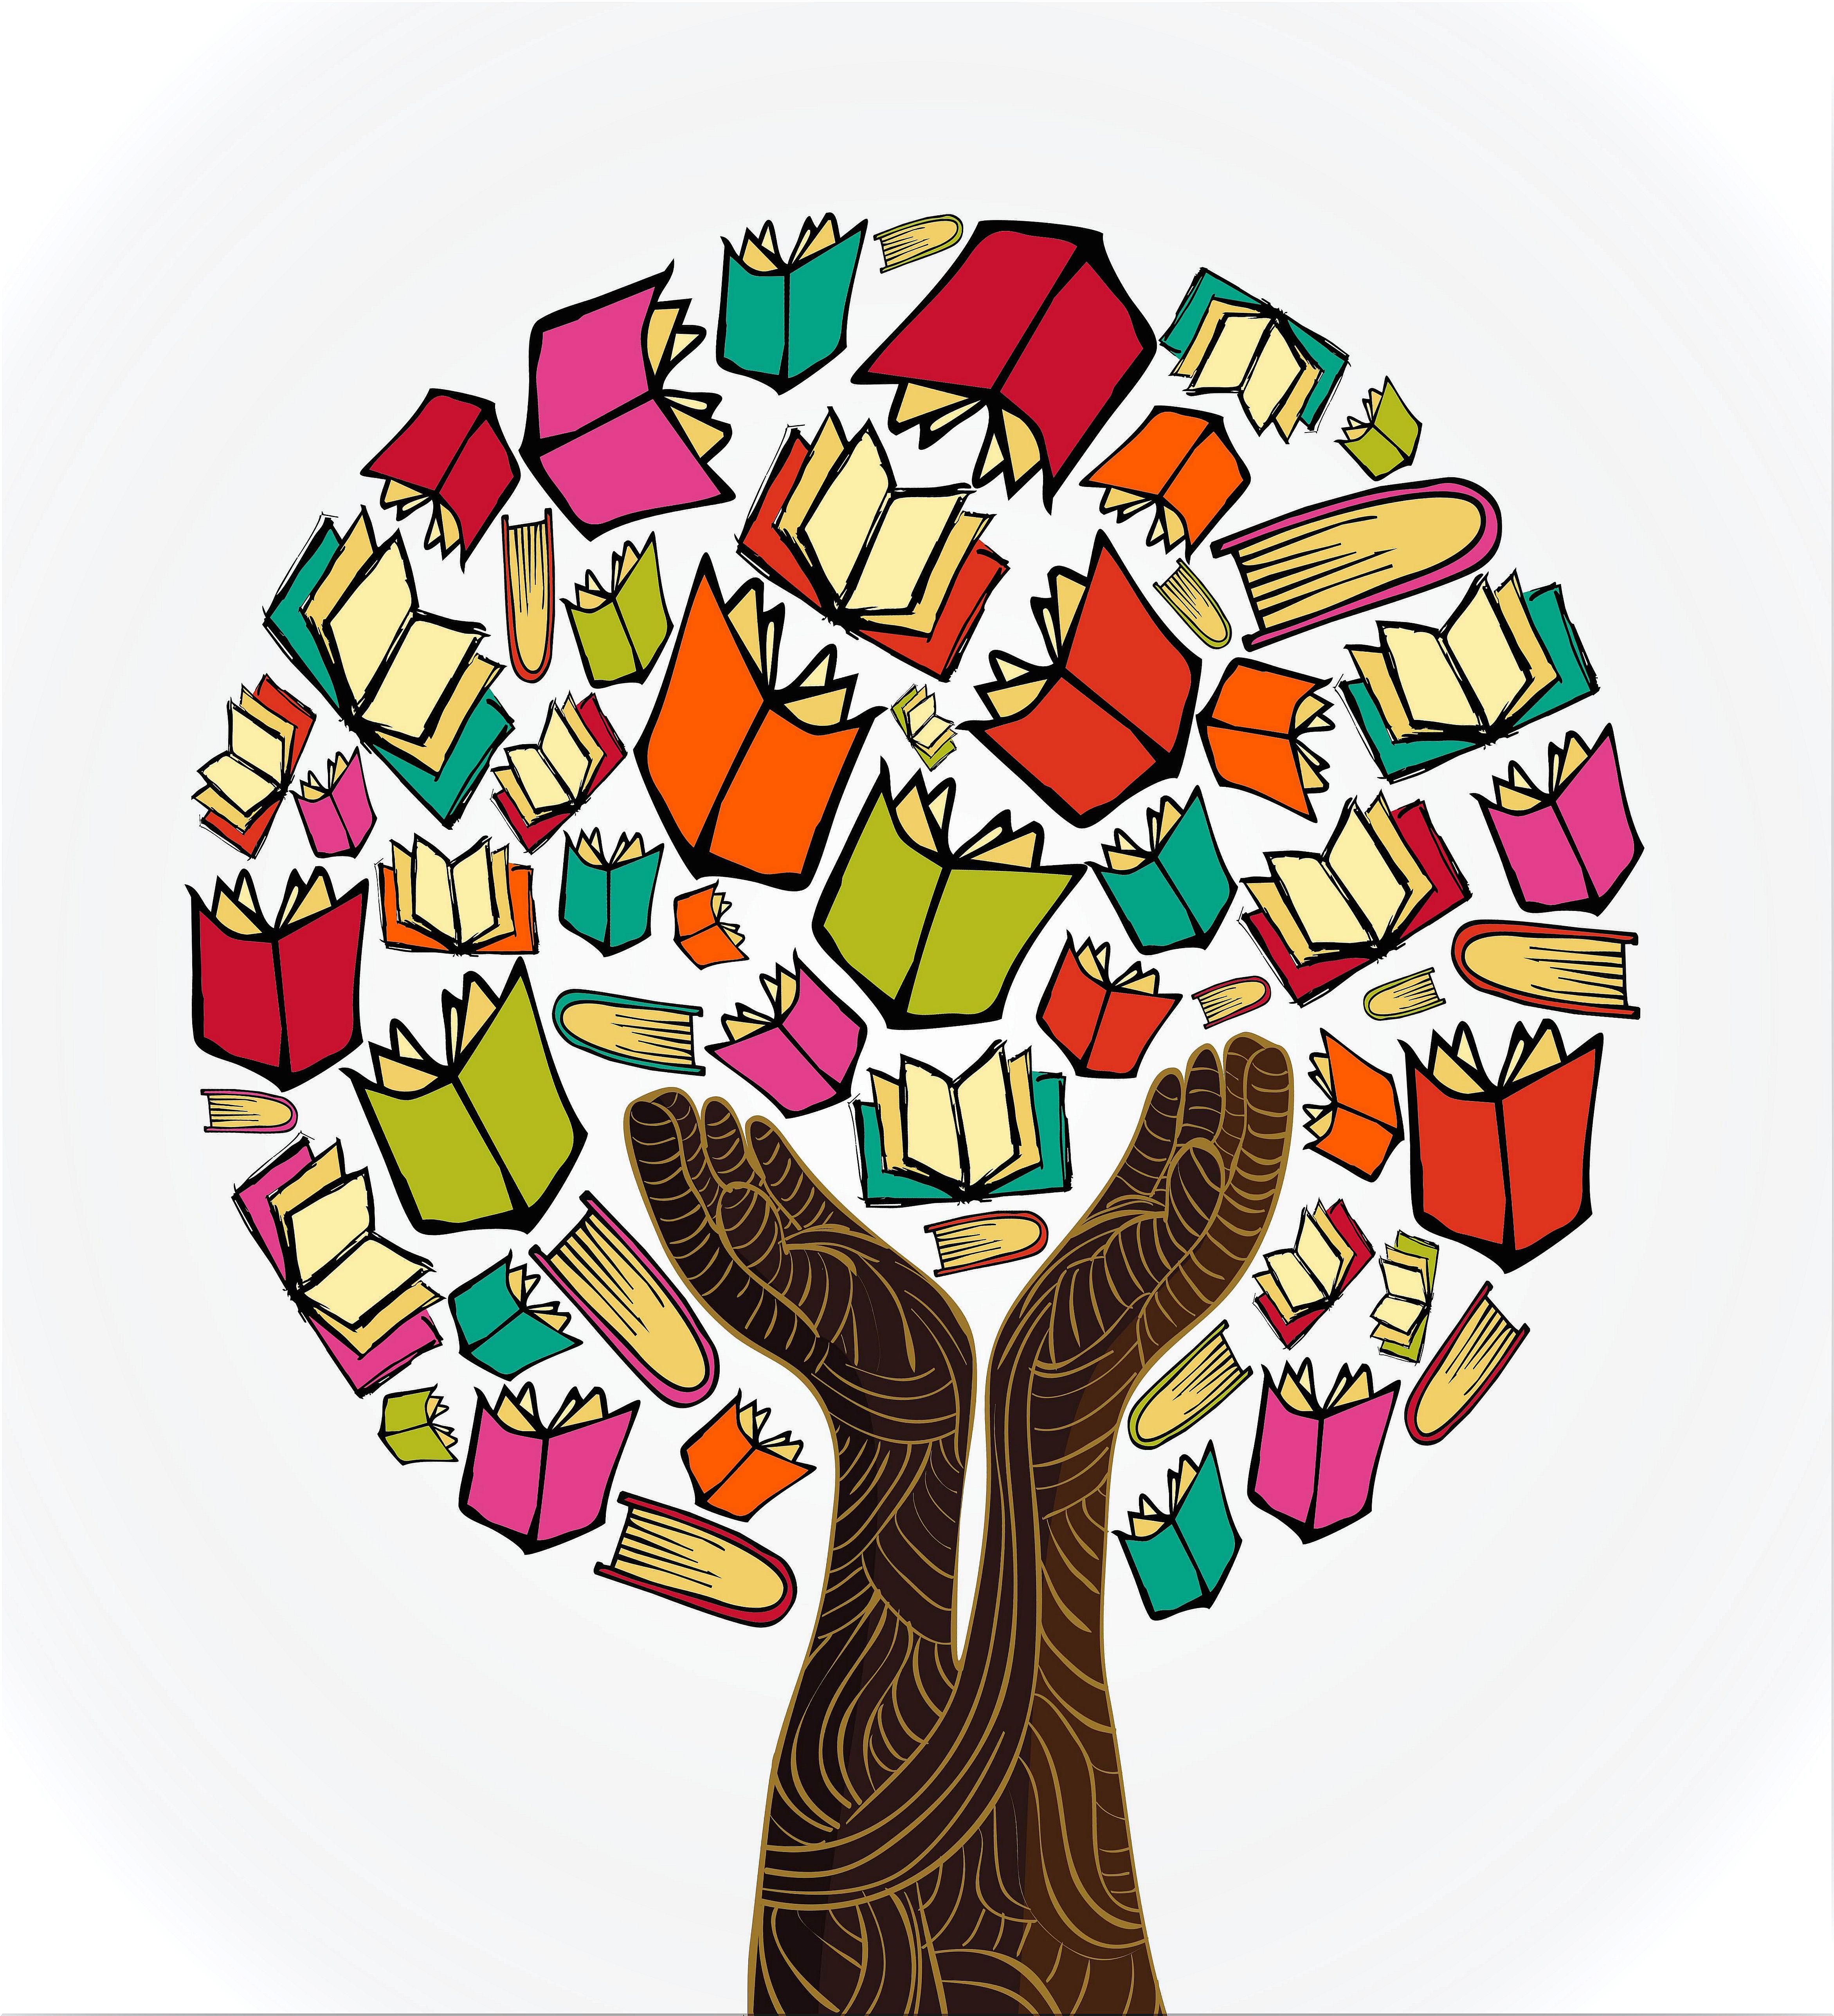 Tree made of books.